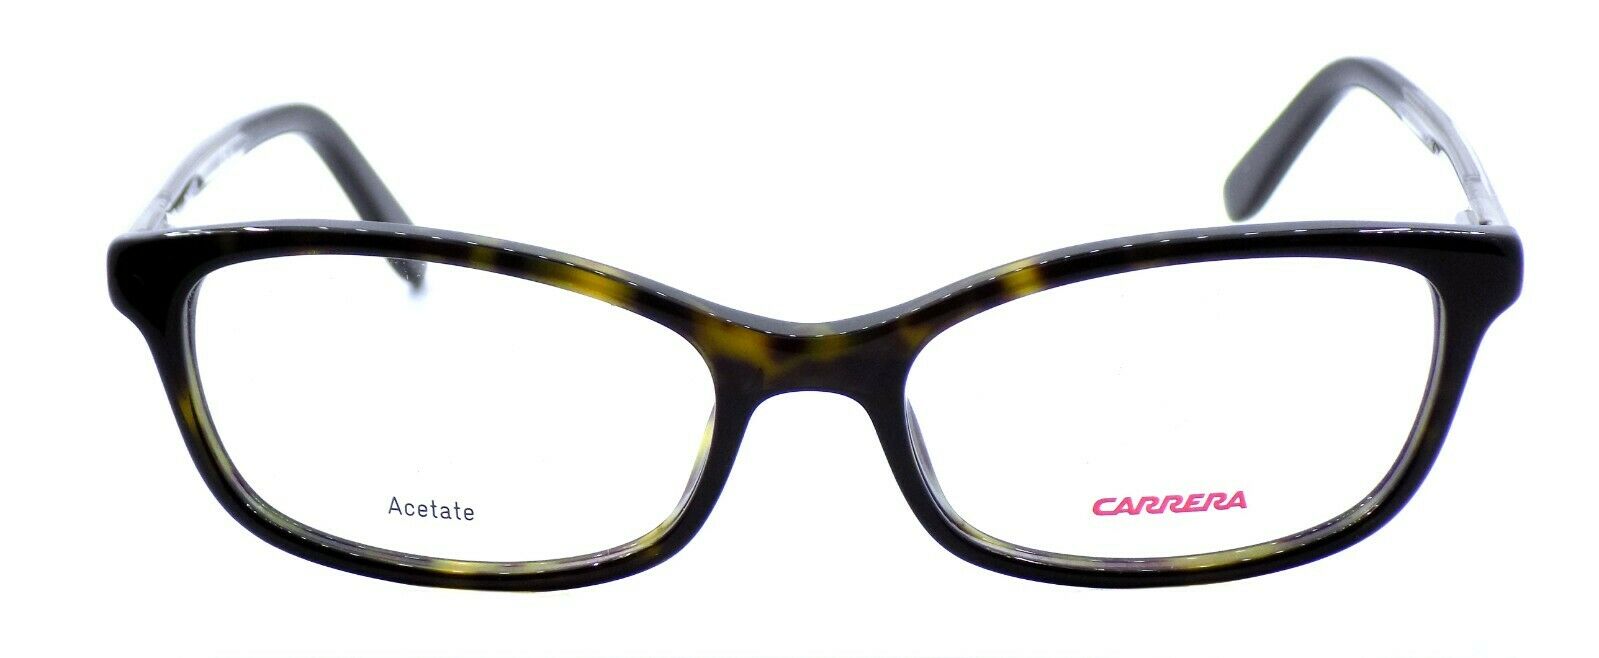 2-Carrera CA6647 QK8 Women's Eyeglasses Frames 52-17-140 Dark Havana + CASE-762753670007-IKSpecs